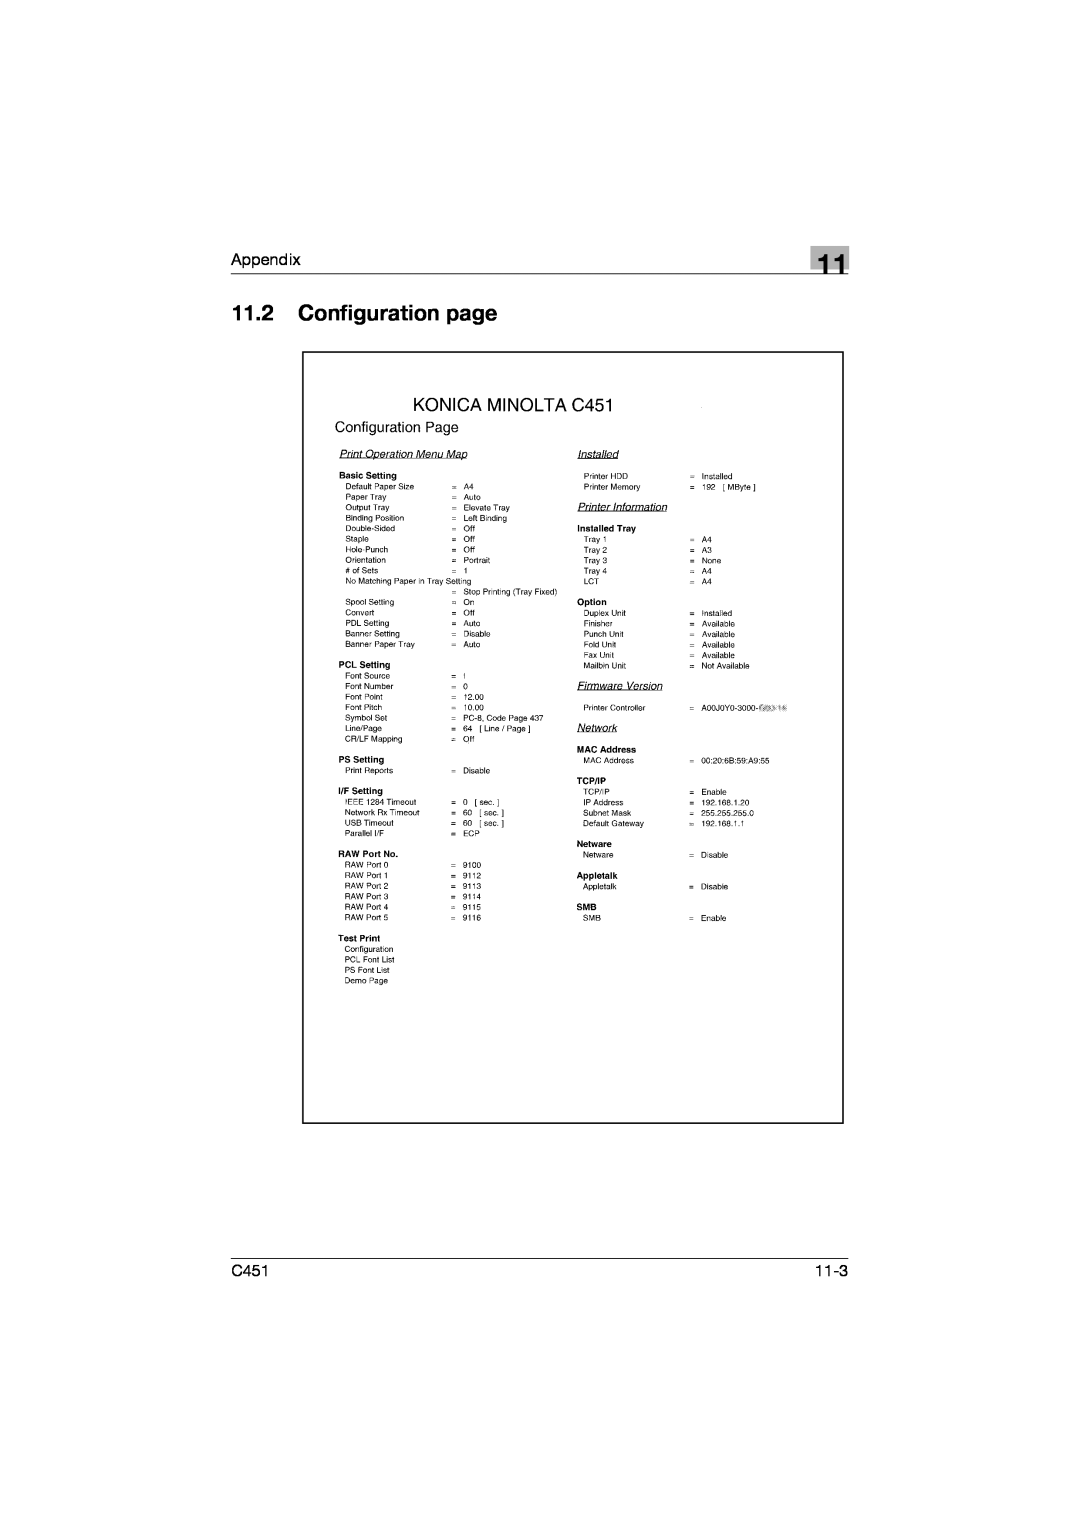 Konica Minolta C451 manual 11.2Configuration page, Appendix, 11-3 